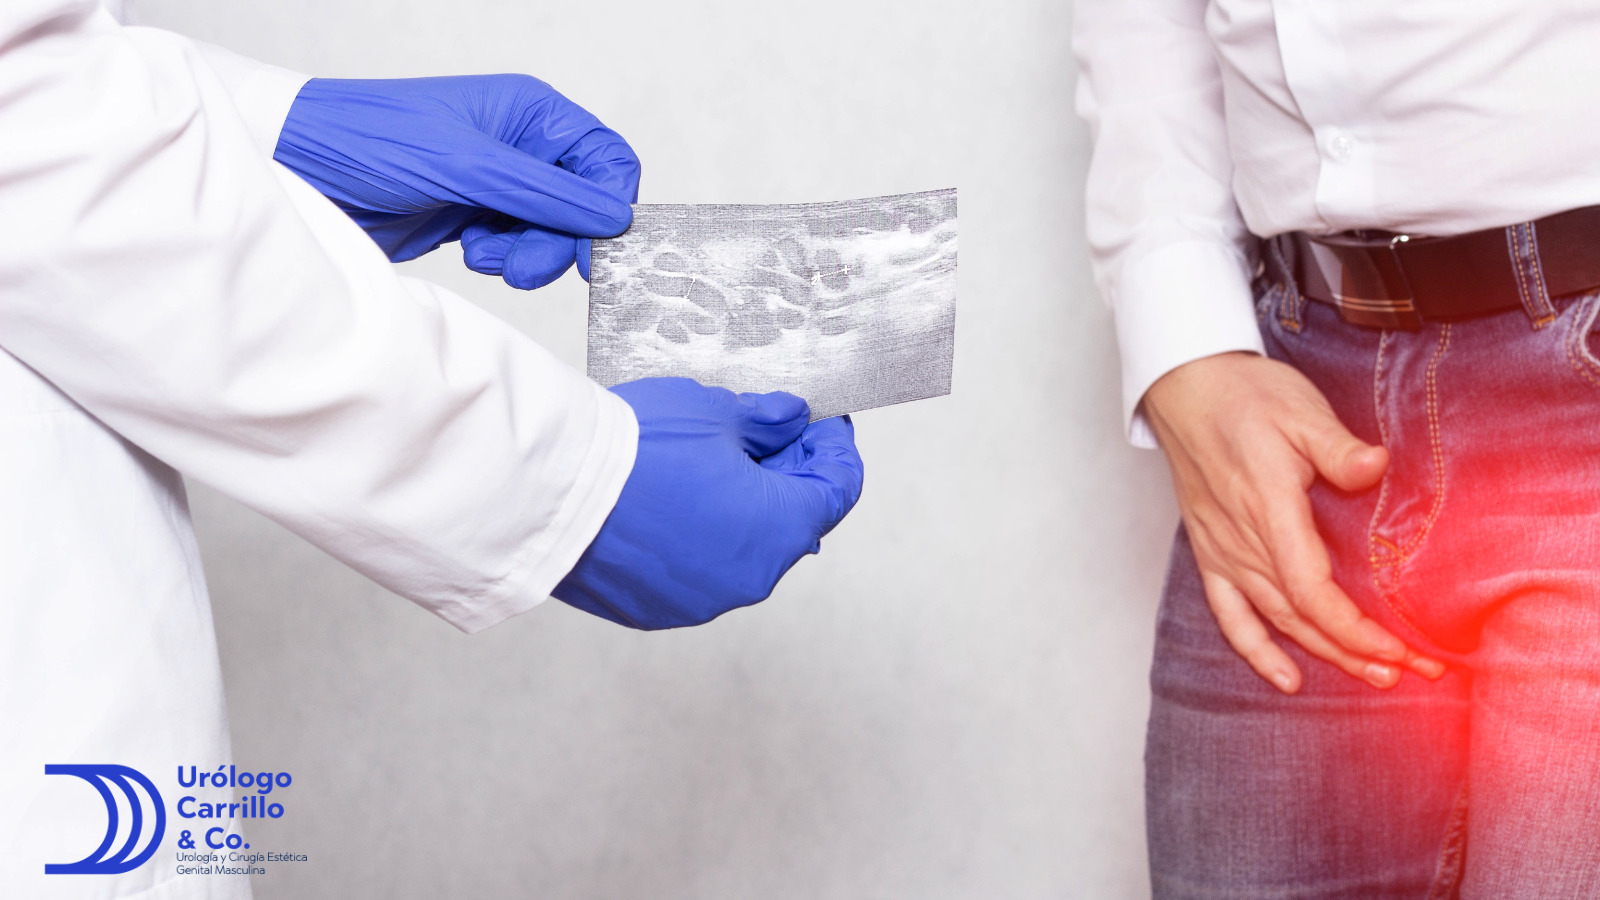 Busca atención medica por un urólogo si experimentas dolor testicular 